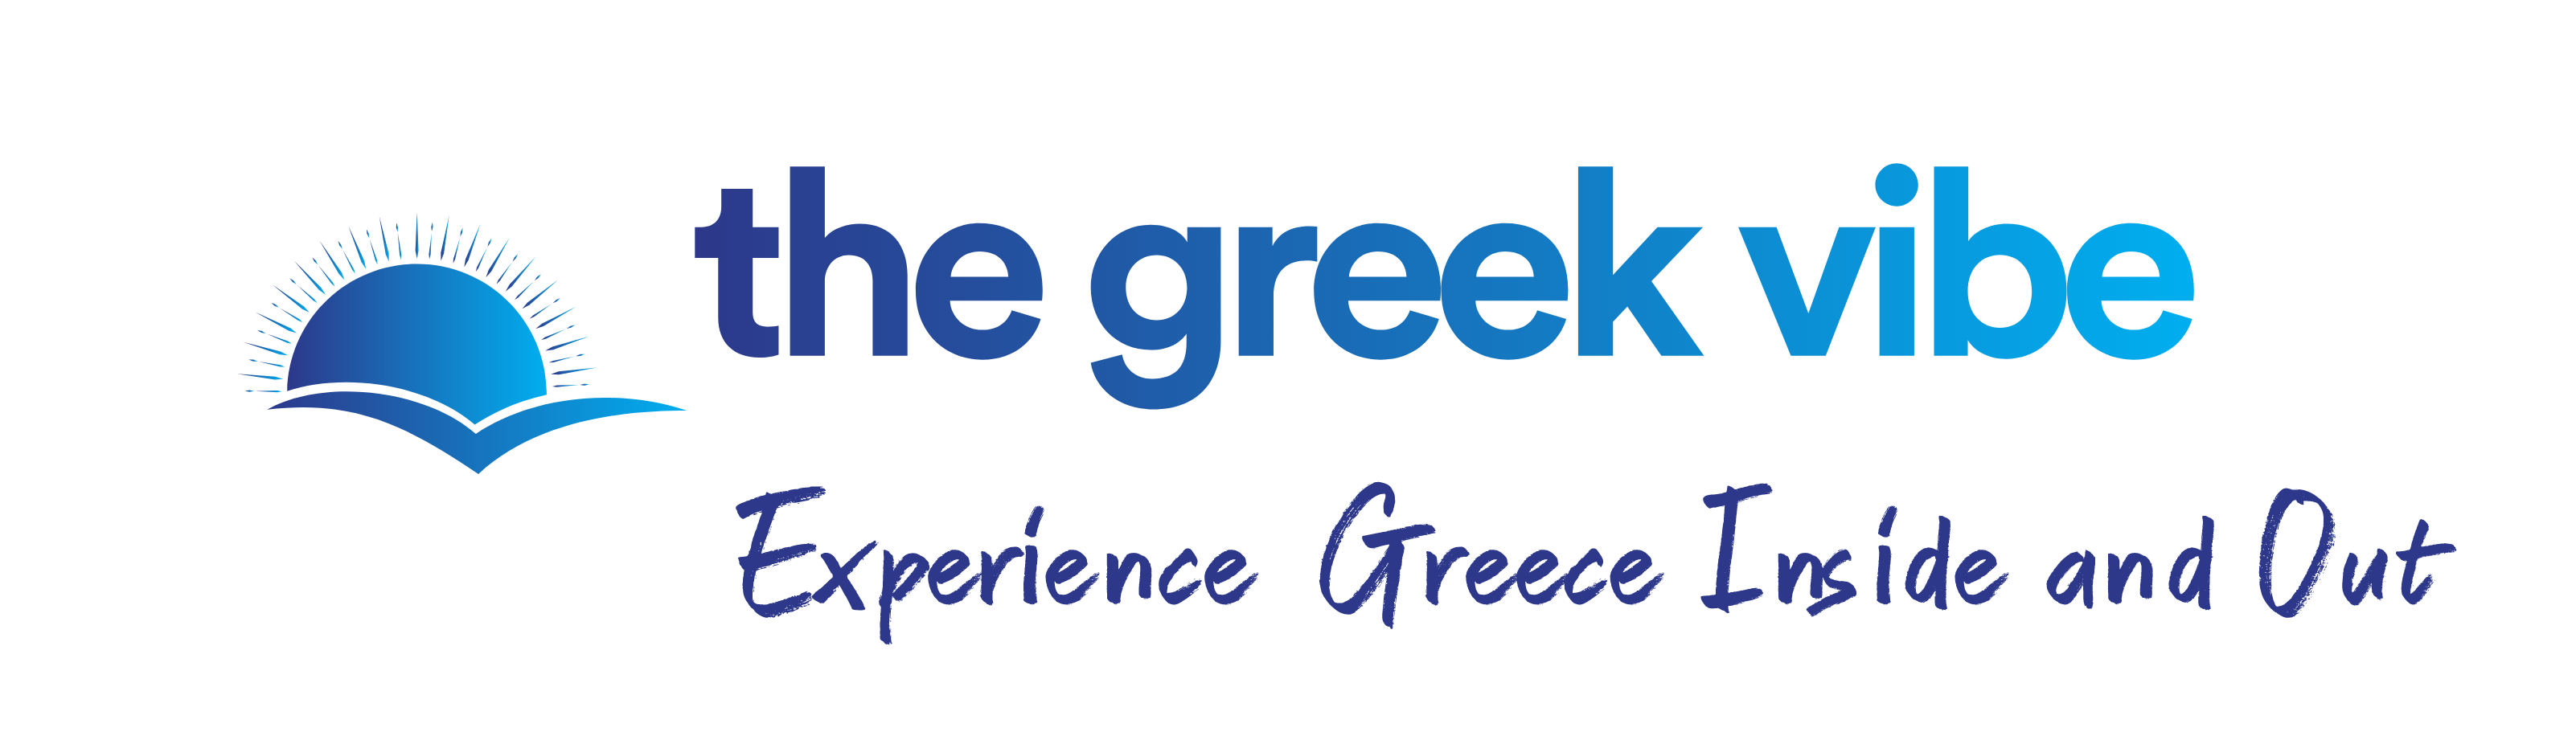 The Greek Vibe